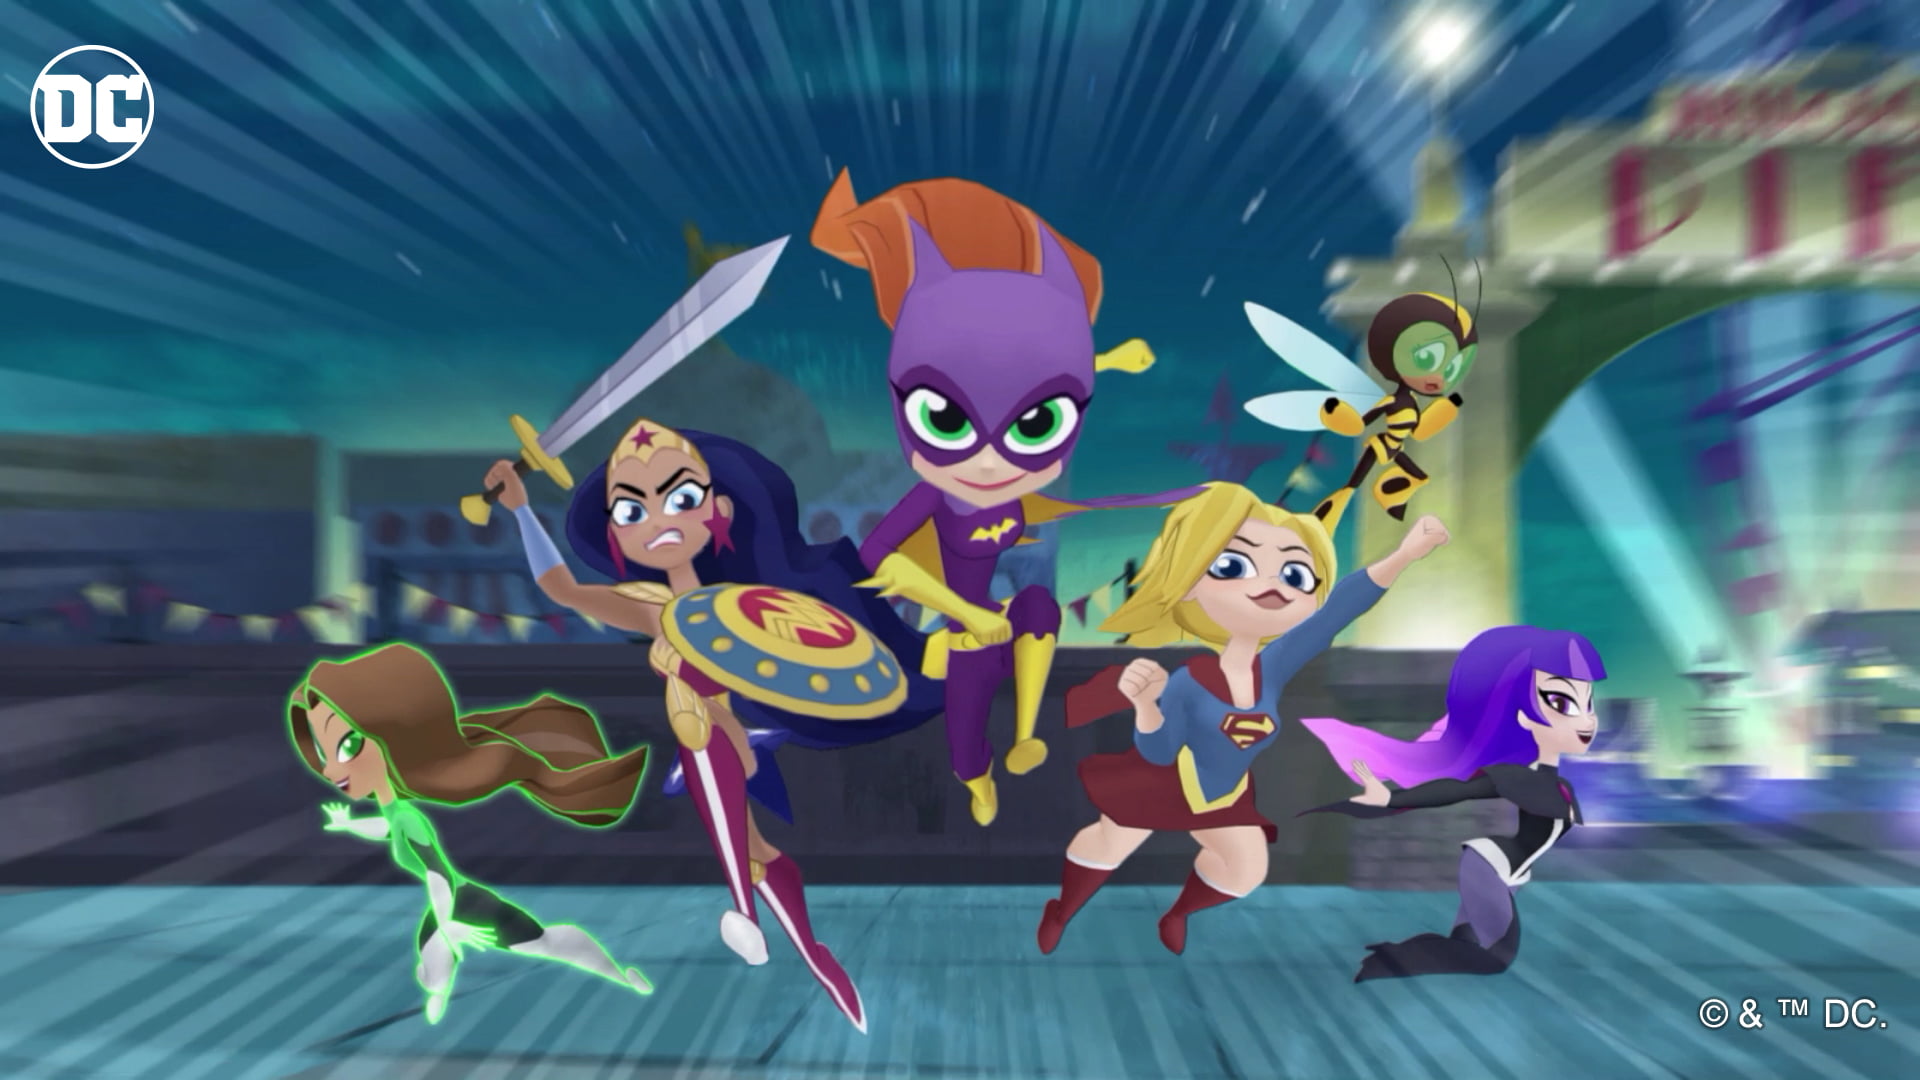 DC Super Hero Girls: Teen Power, Nintendo Switch [Physical], 045496597573 